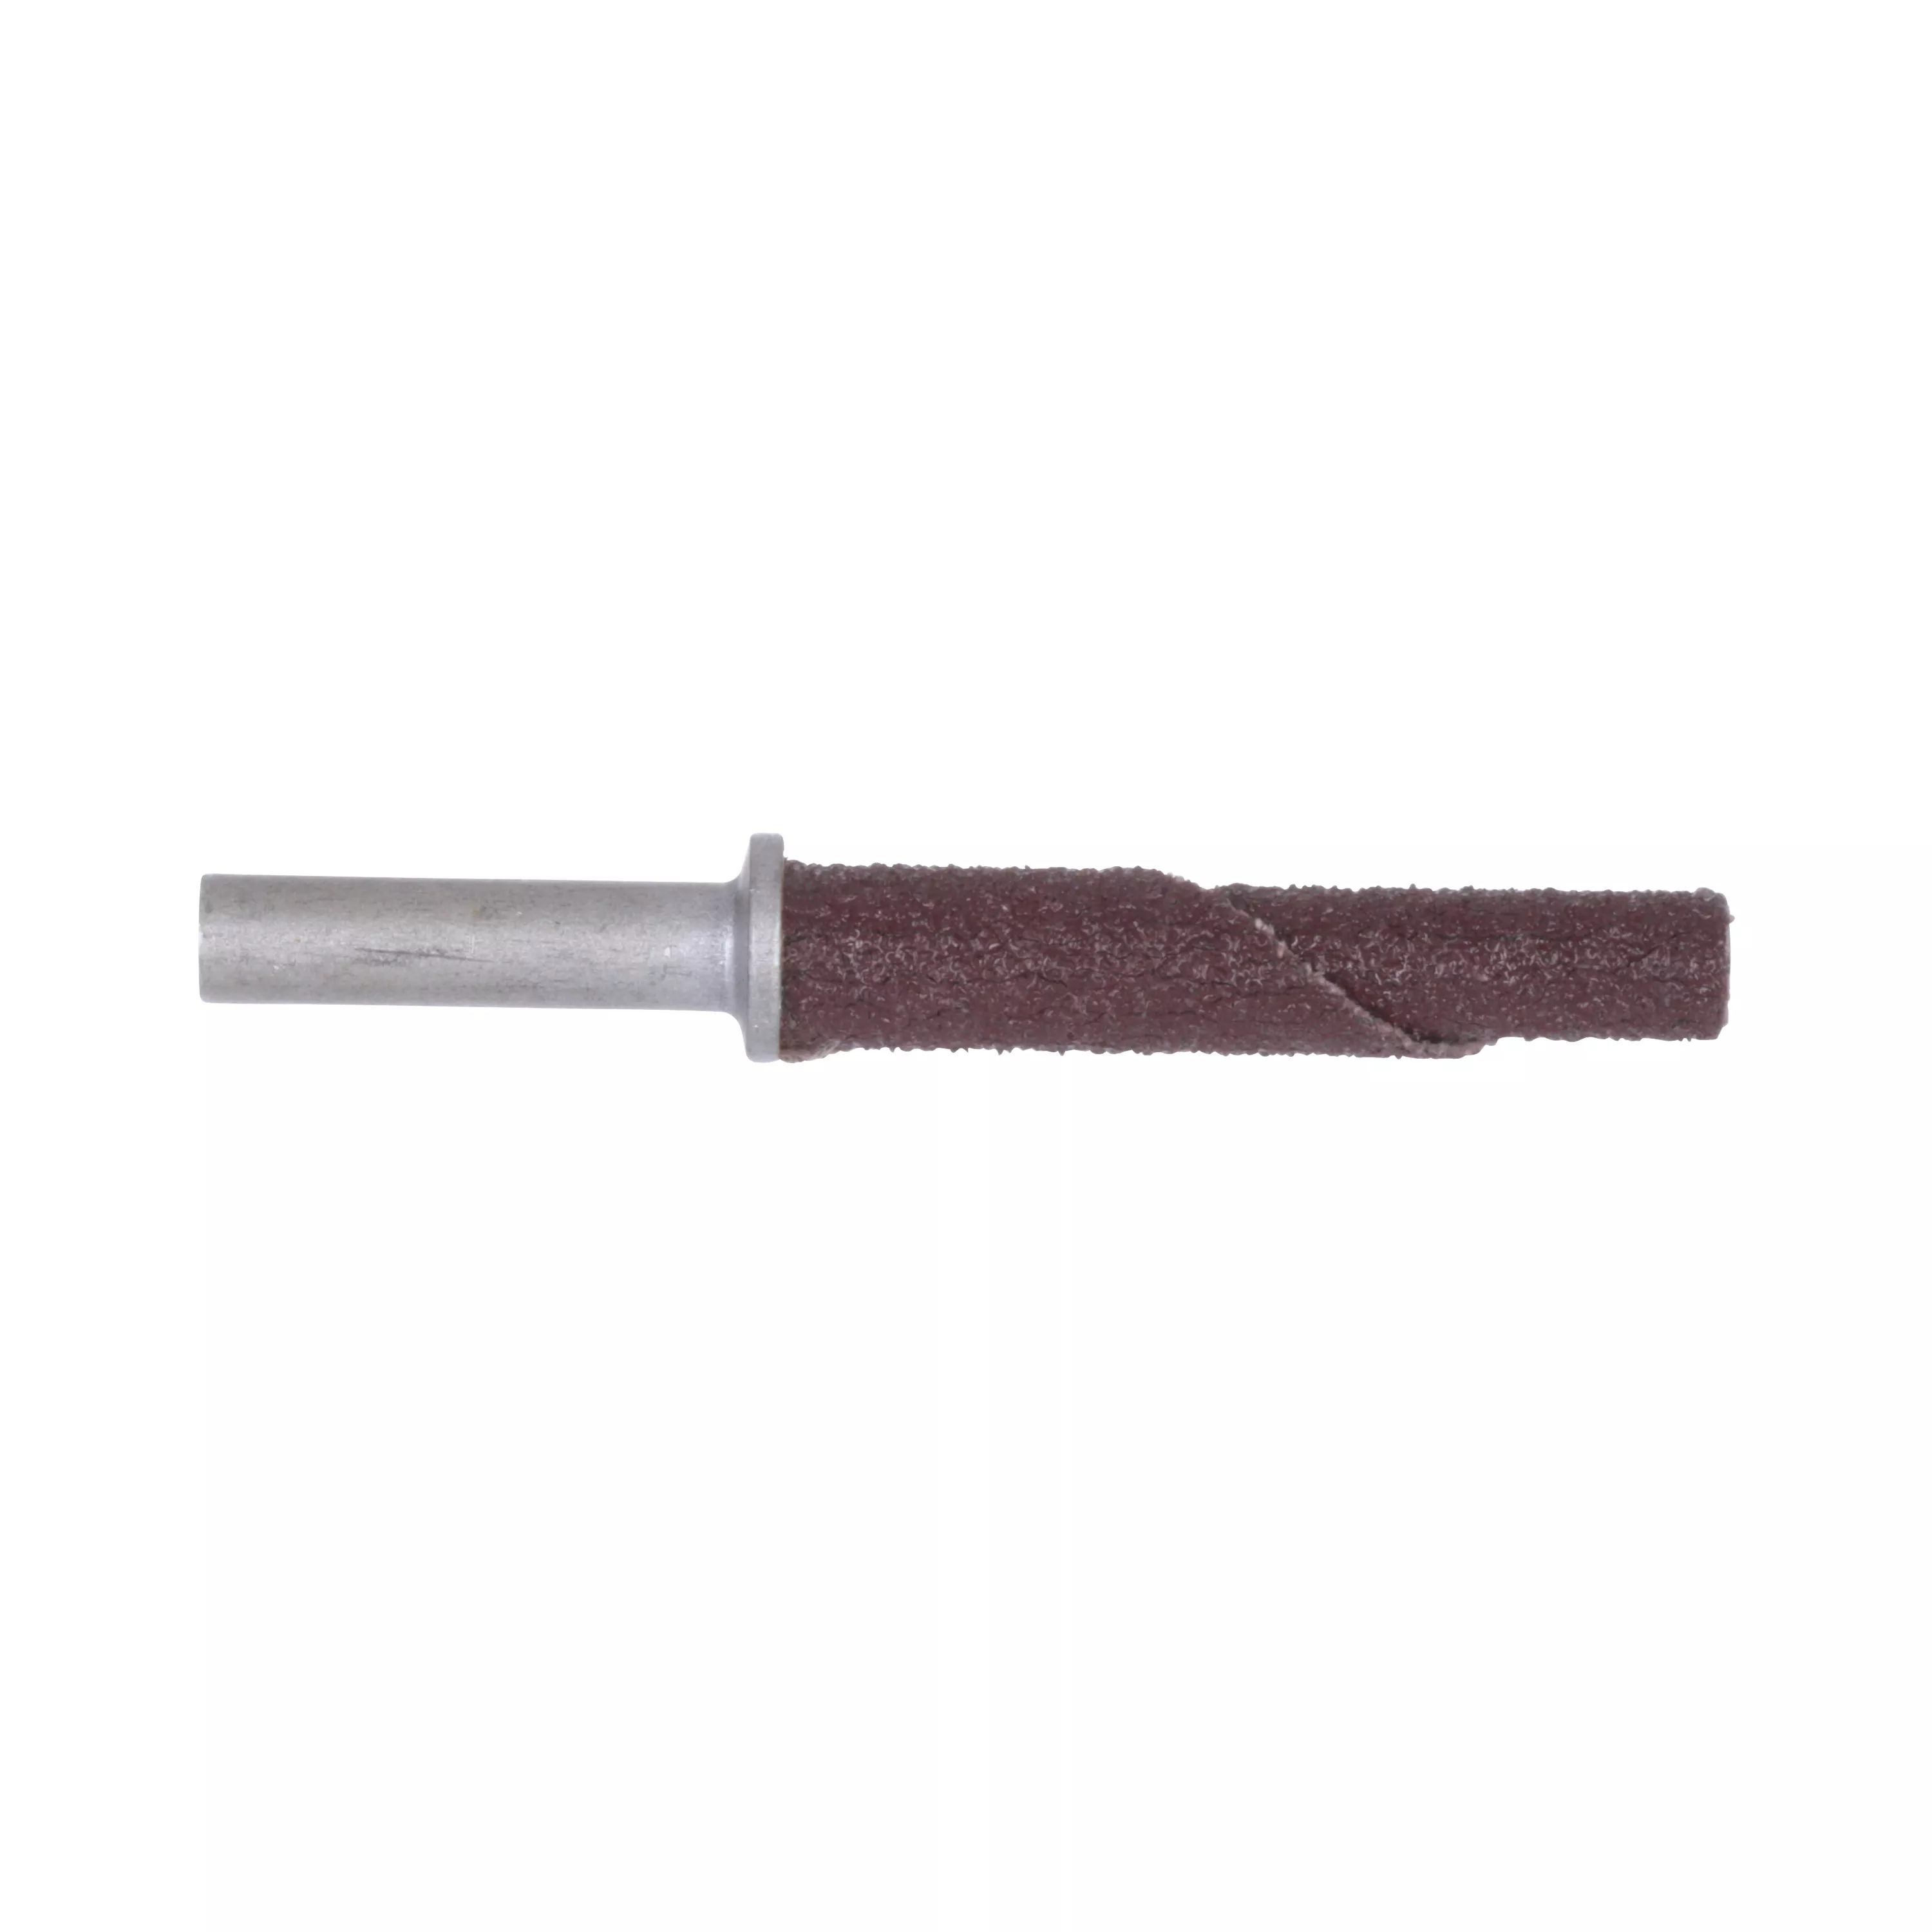 SKU 7100098752 | Standard Abrasives™ A/O Precision Cartridge Roll